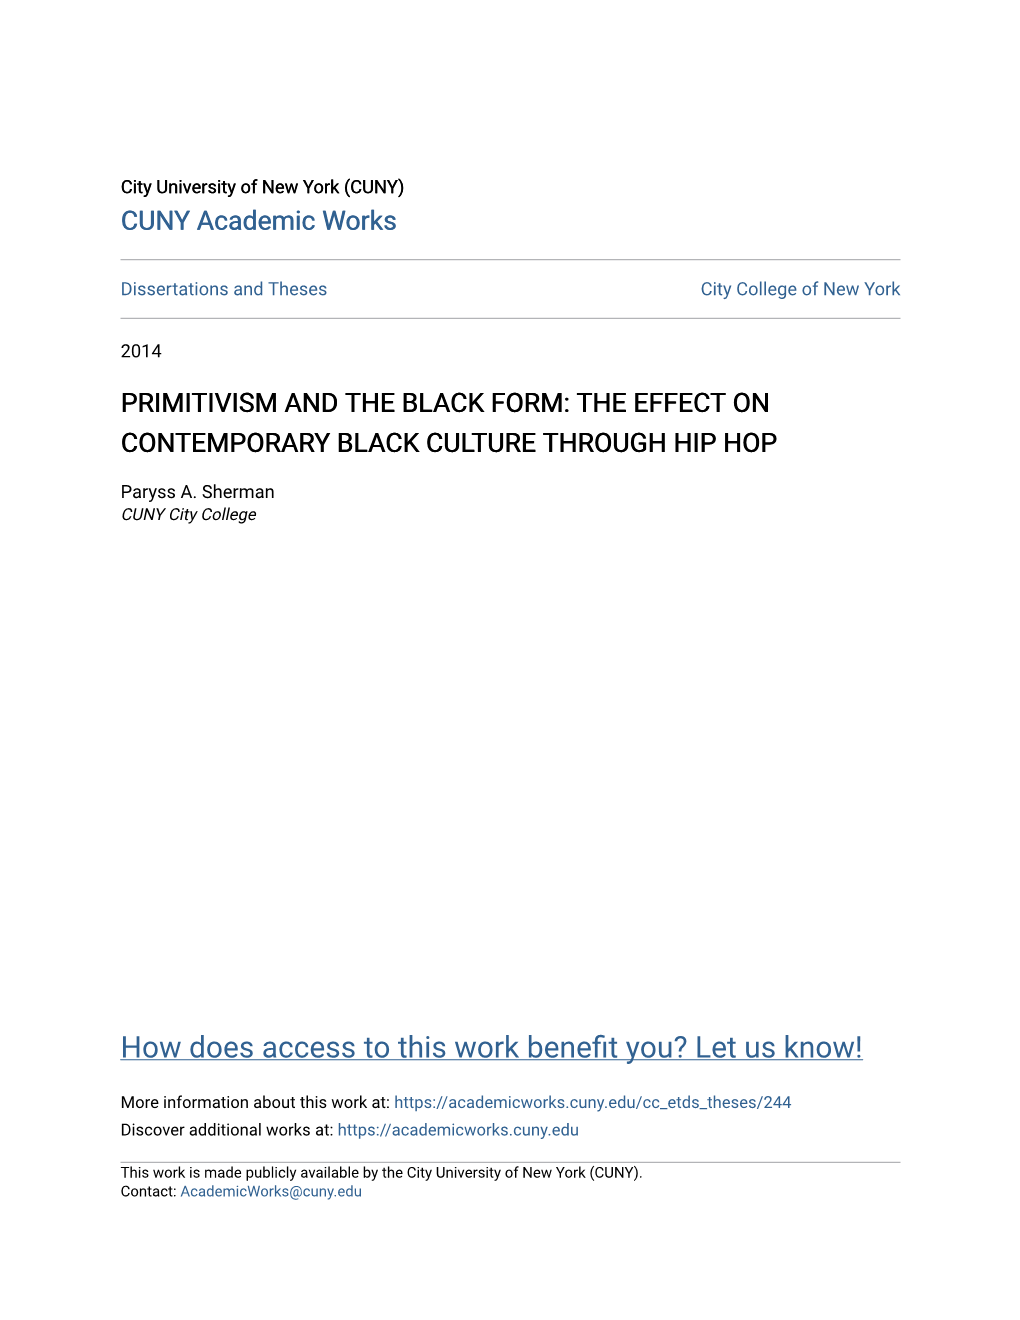 Primitivism and the Black Form: the Effect on Contemporary Black Culture Through Hip Hop